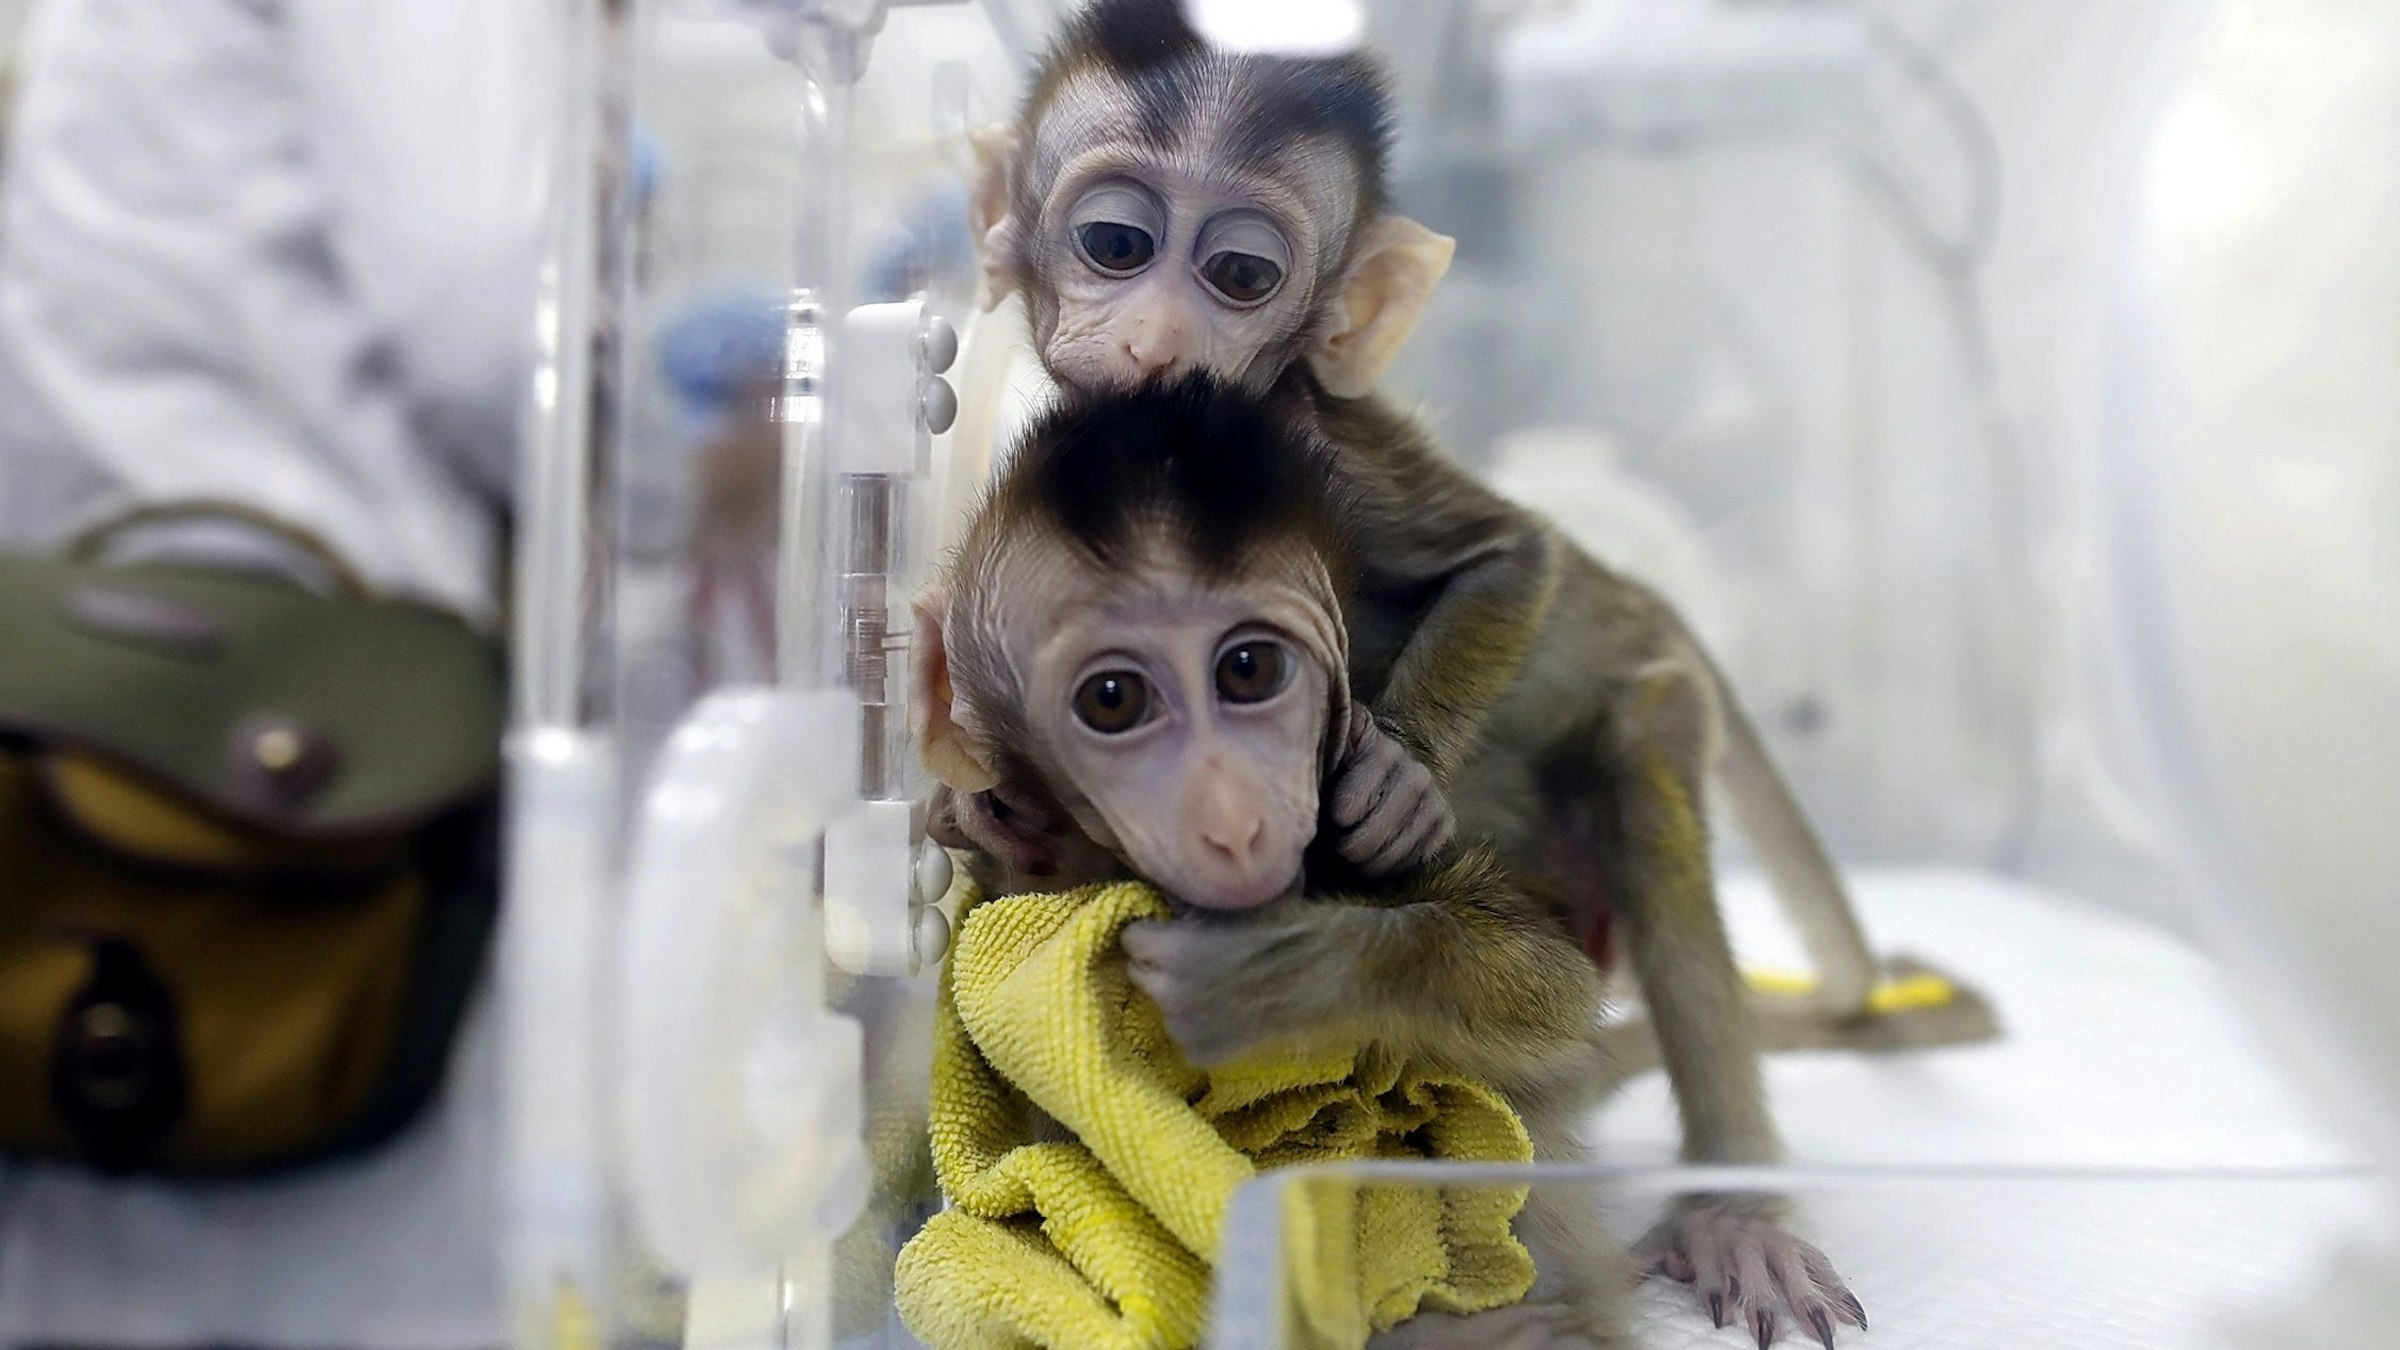 Animal welfare groups hail FDA decision to lift animal testing requirements  - Detroit Catholic